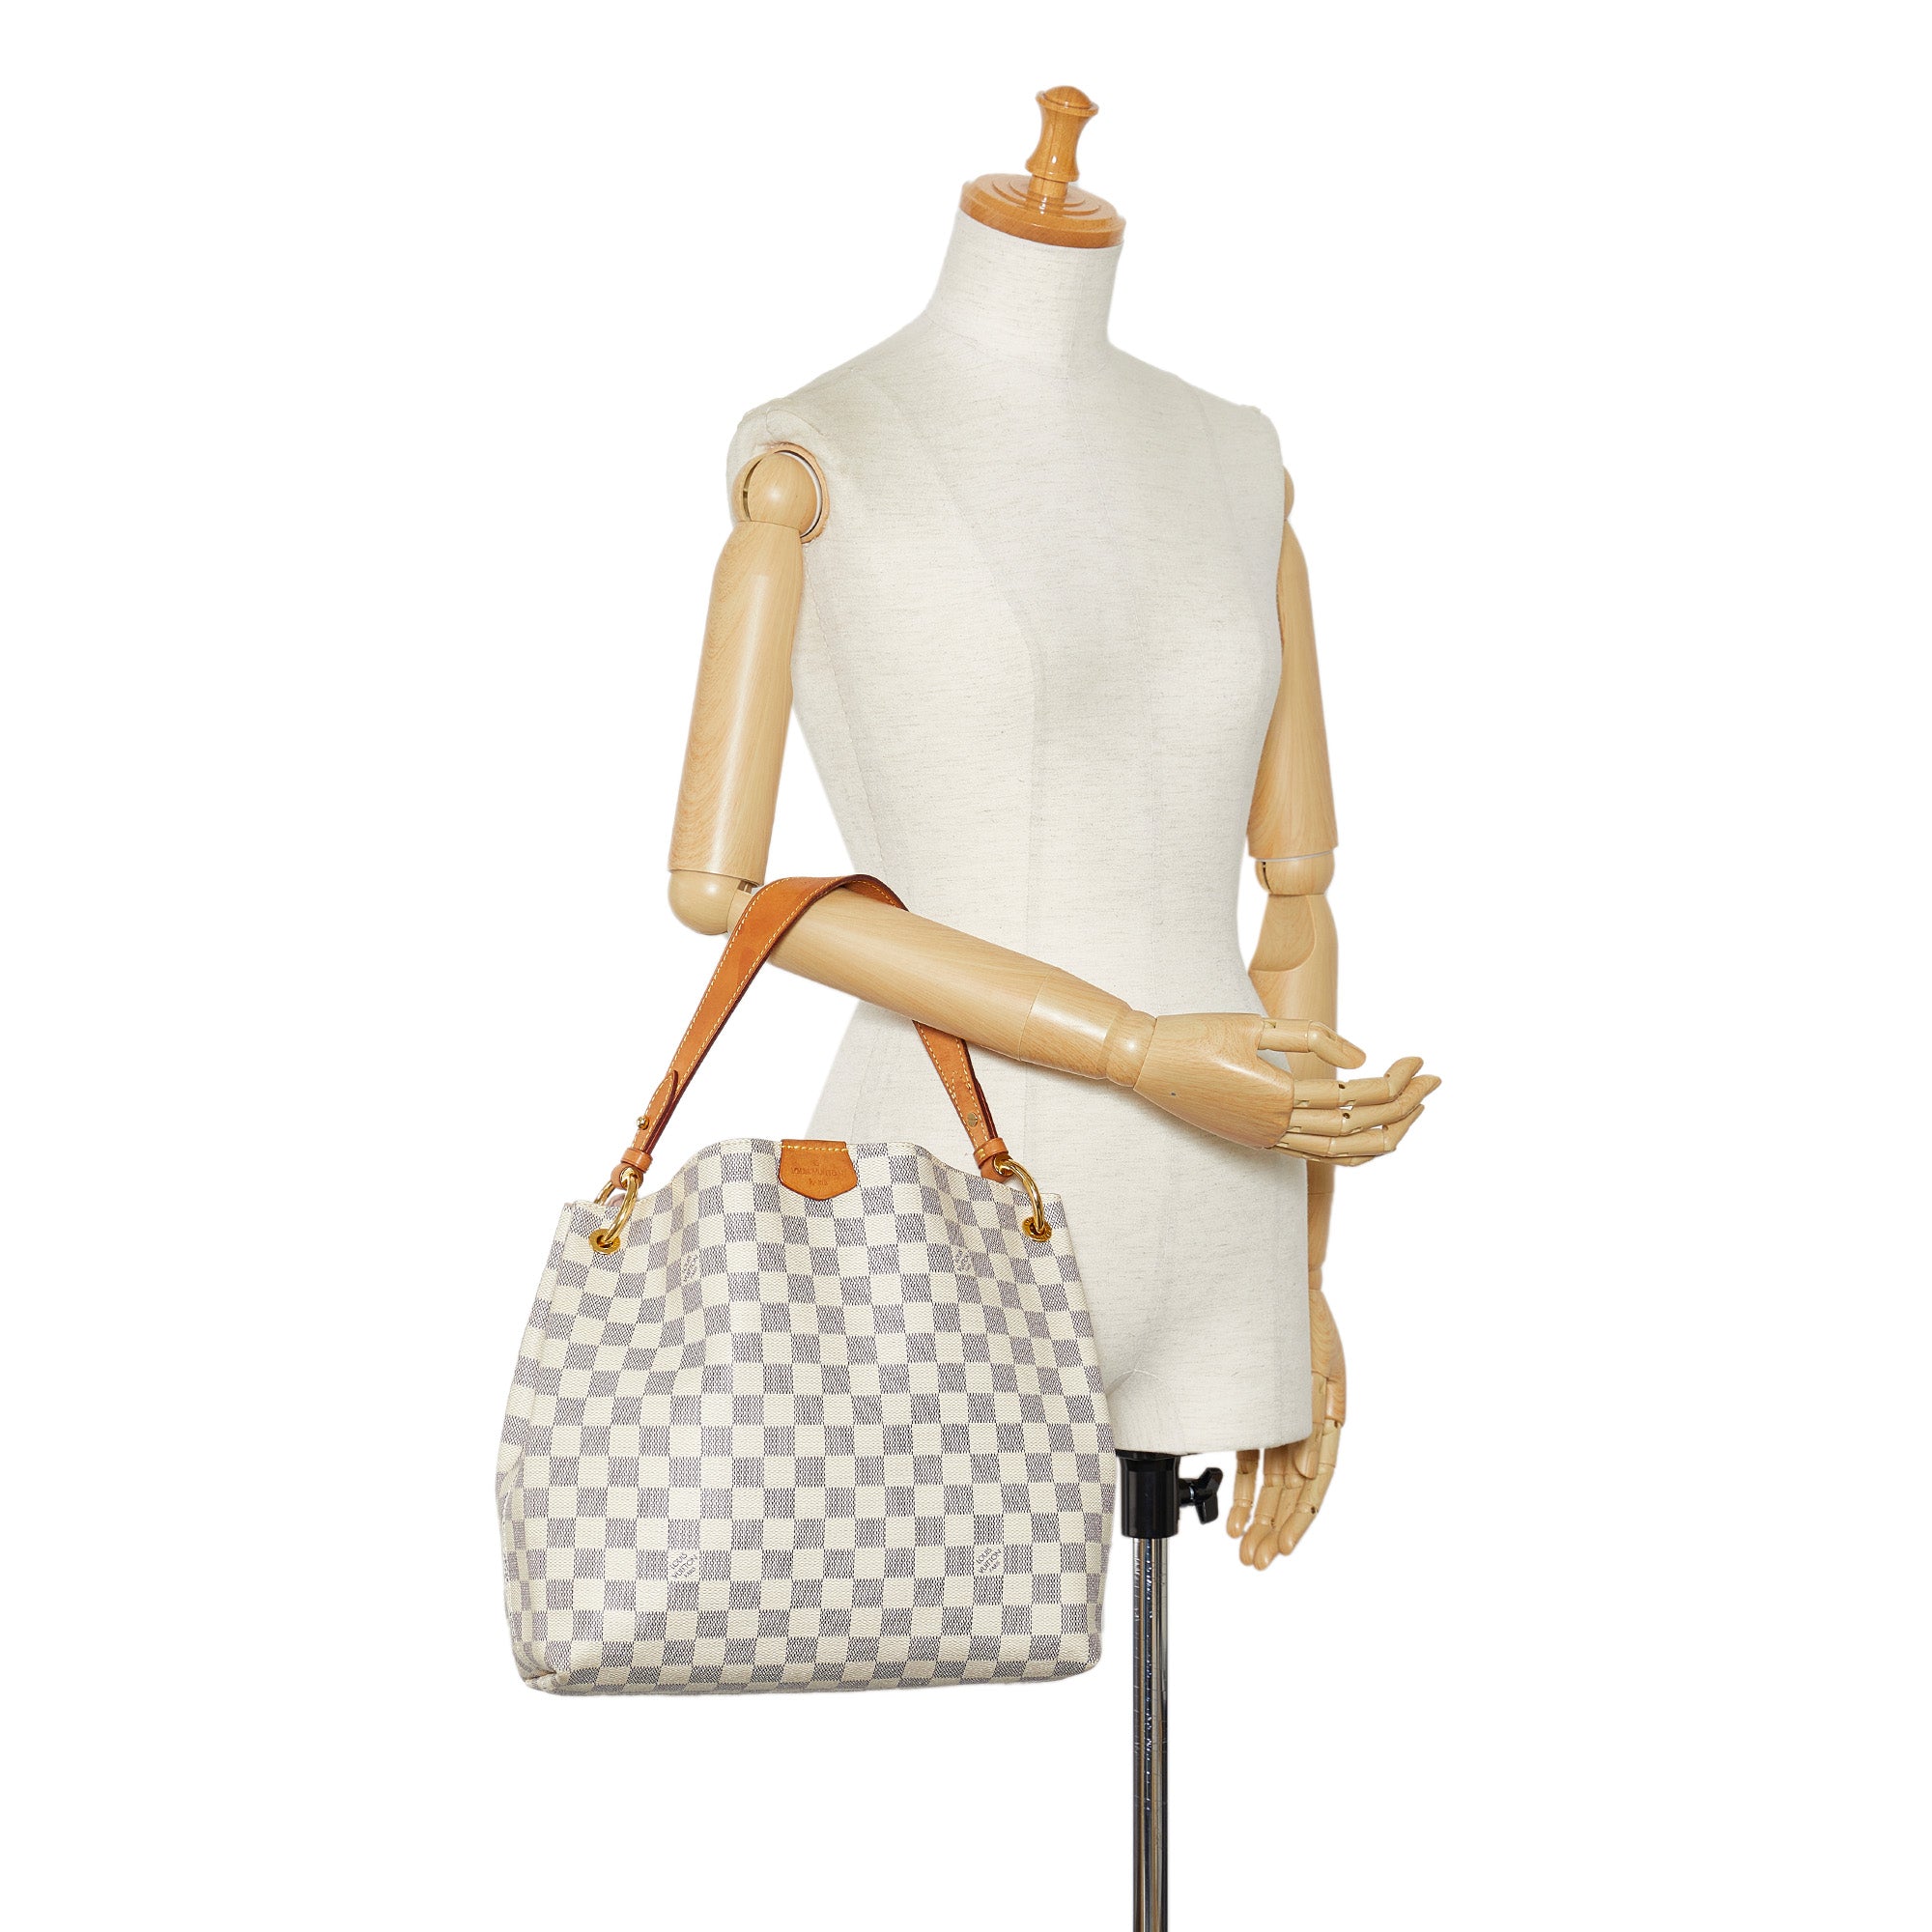 Graceful PM Damier Azur - Women - Handbags